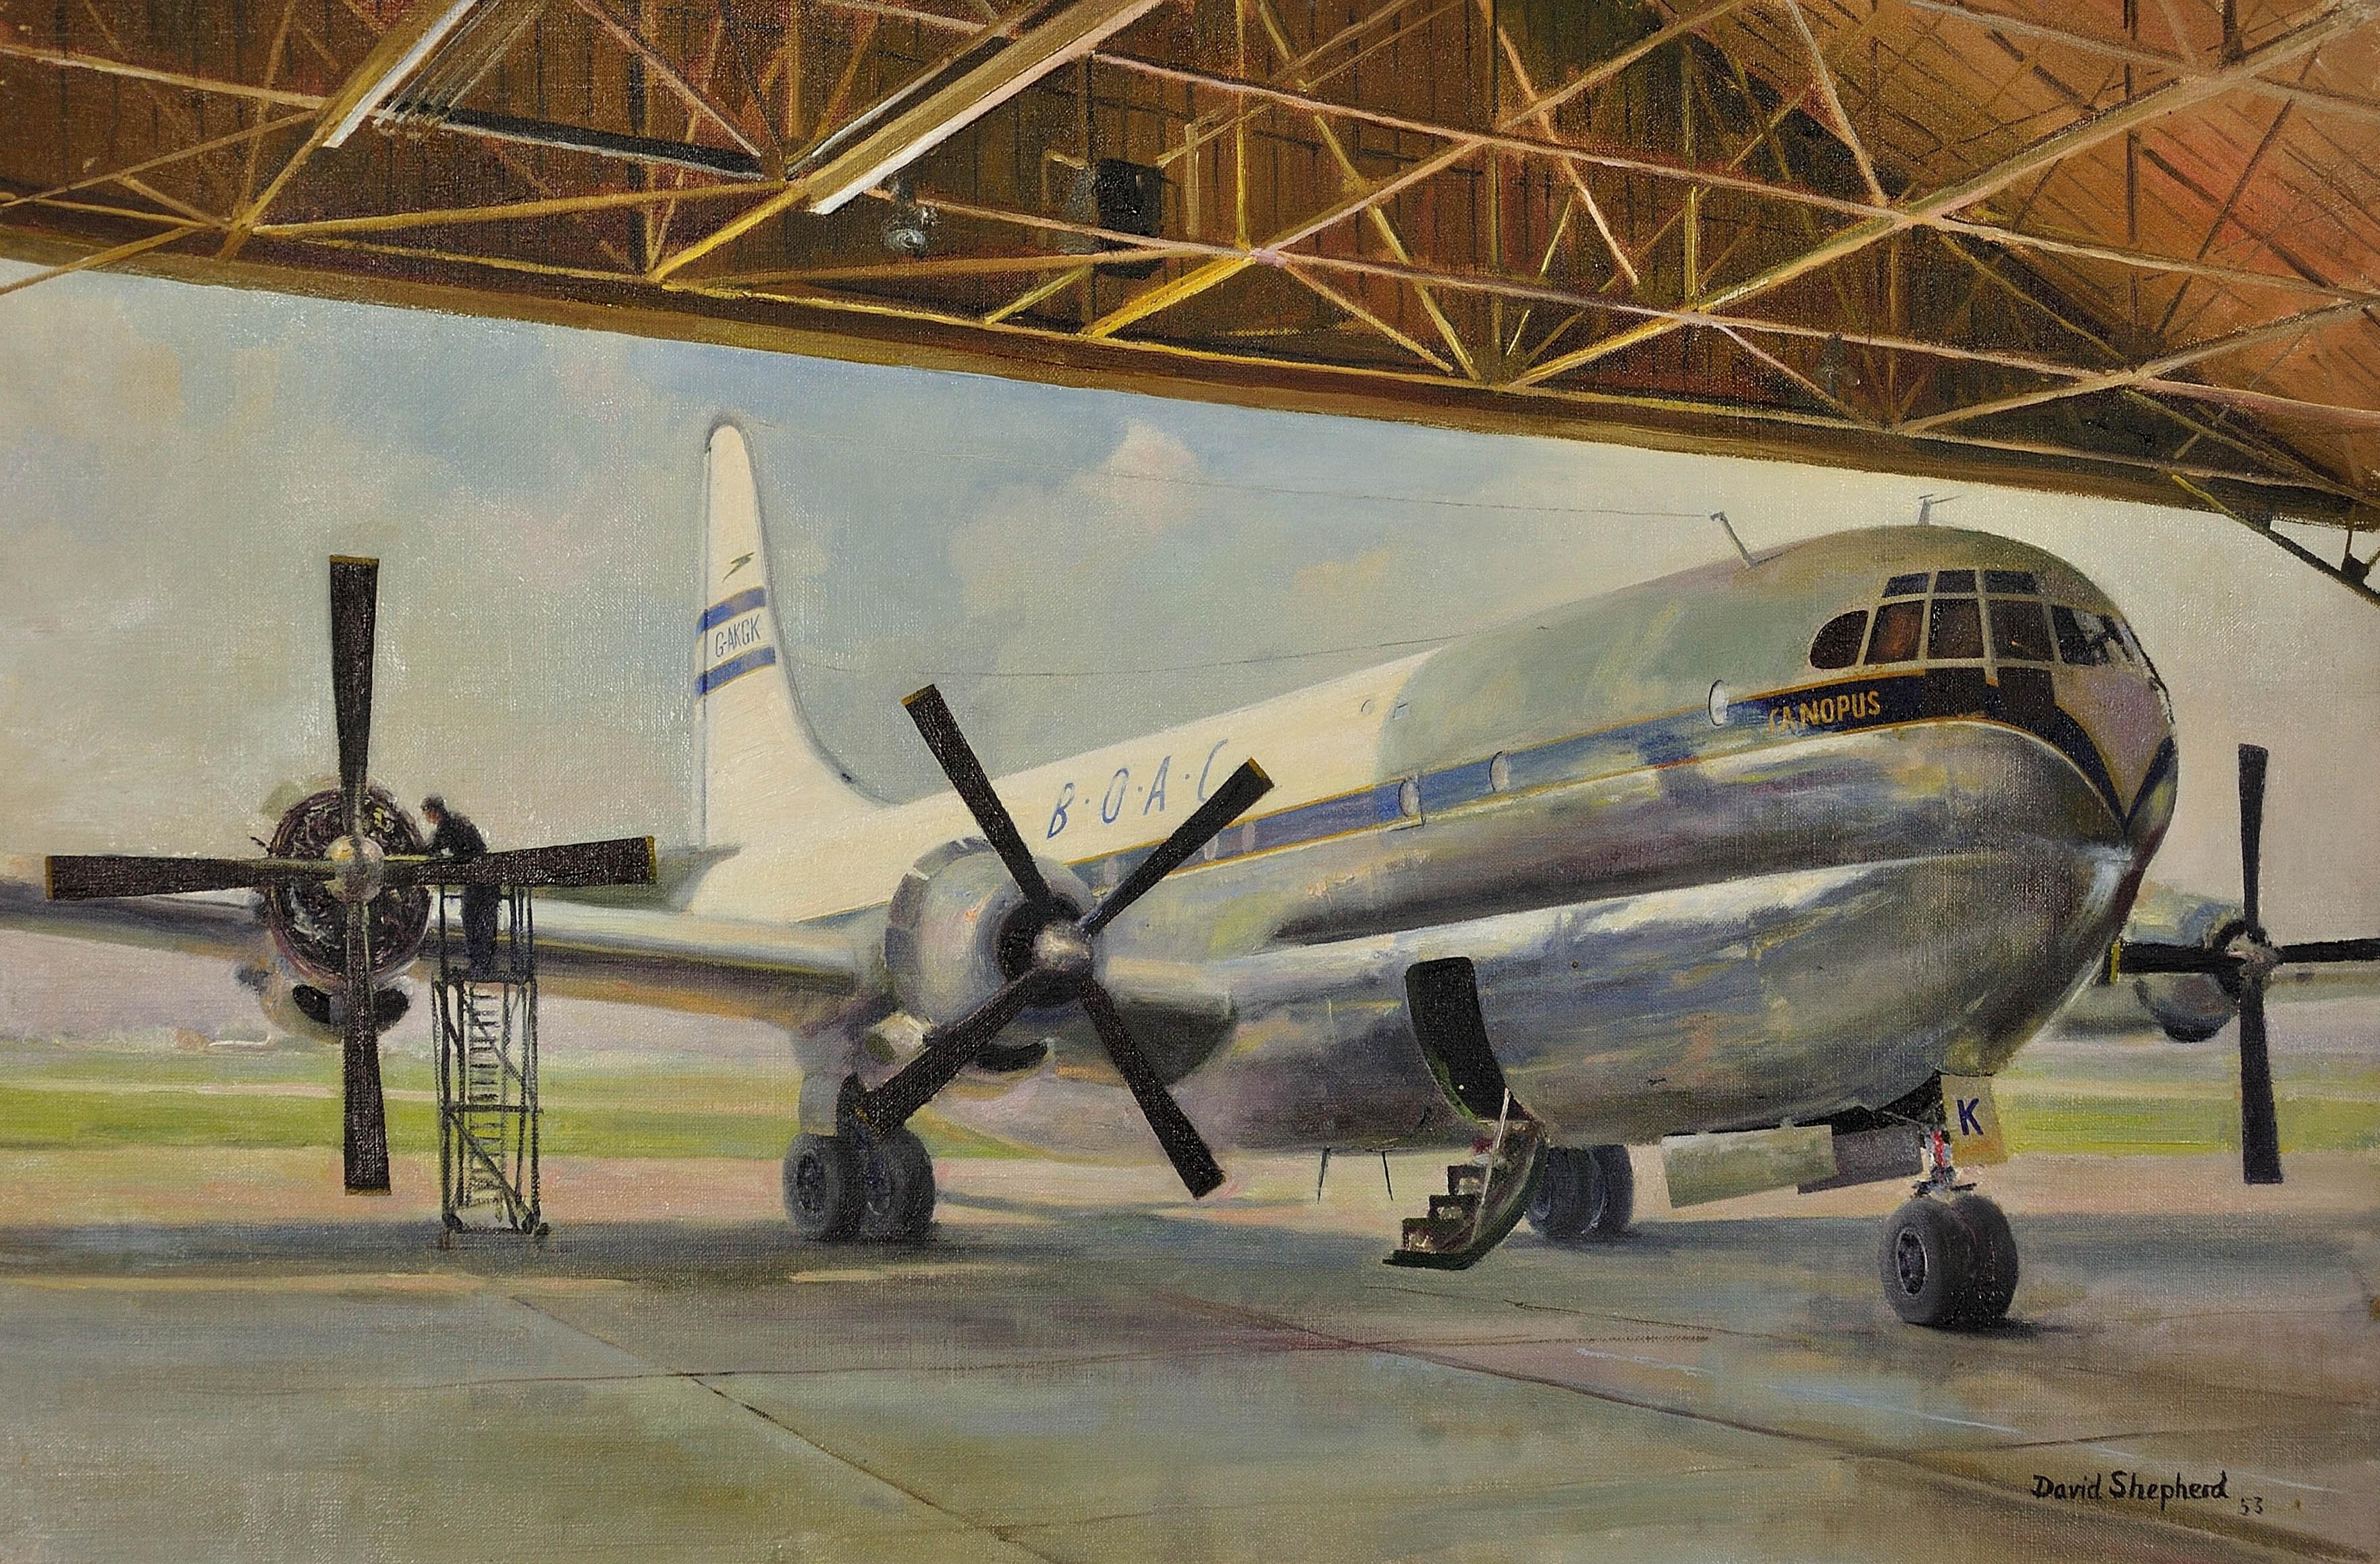 Giant Refreshed, 1953. BOAC Boeing 377 Stratocruiser, Canopus, Flugzeug Luftfahrt. – Painting von David Shepherd